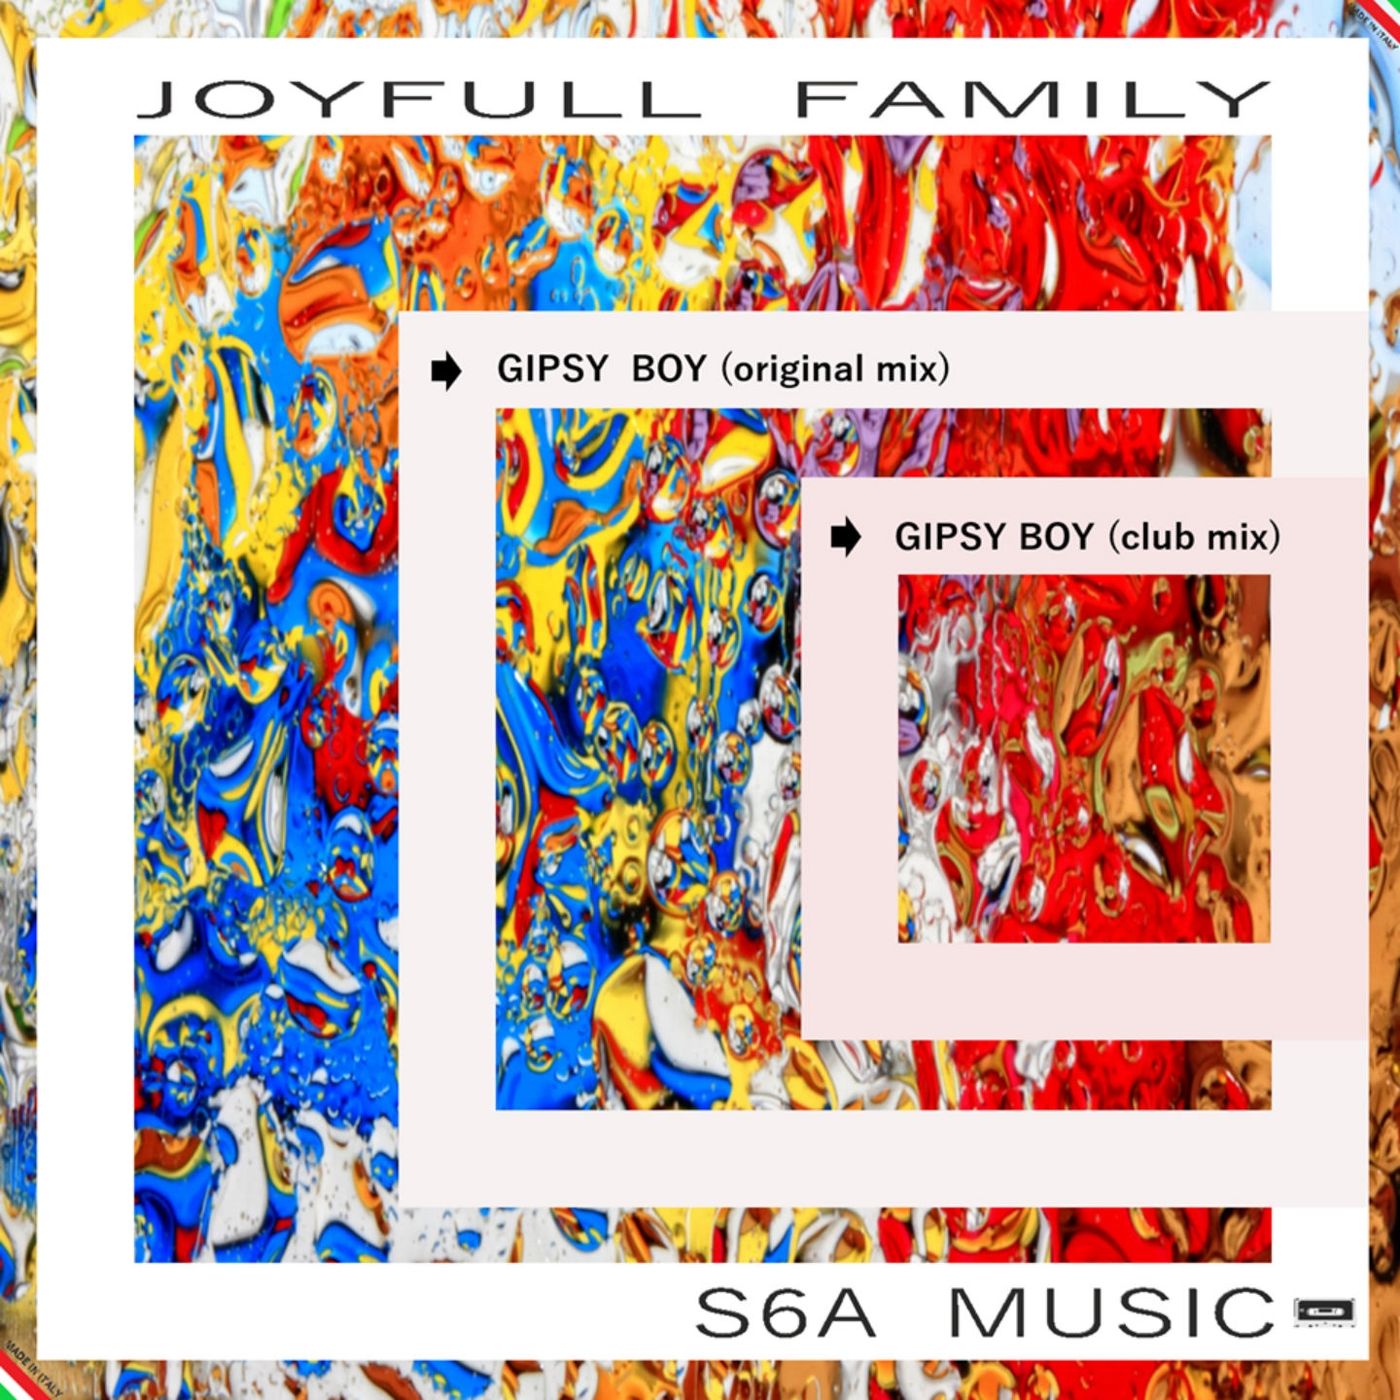 Joyfull Family - Gipsy Boy / S6A Music